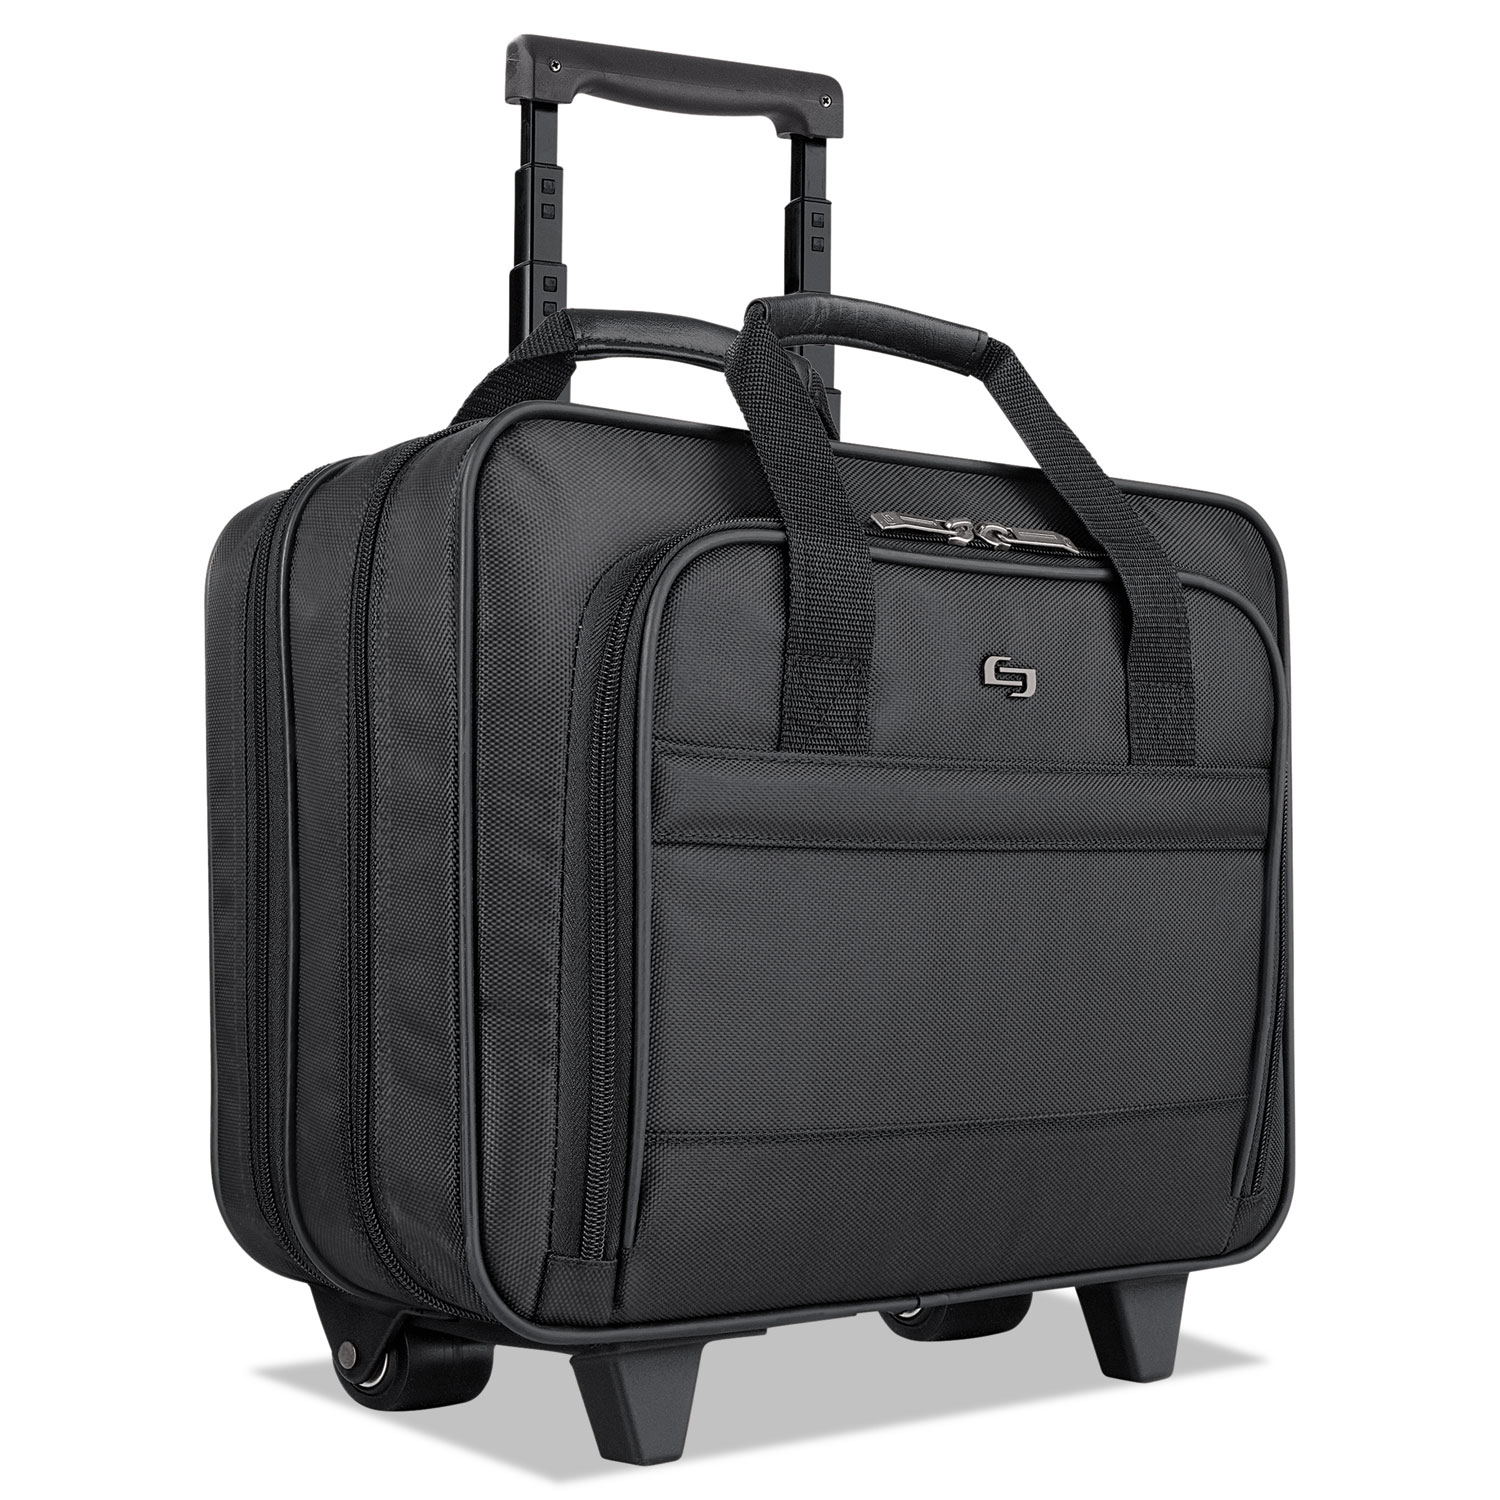 USL Luggage Rolling Travel Bag Laptop Computer Organizer Carry On NICE!!!